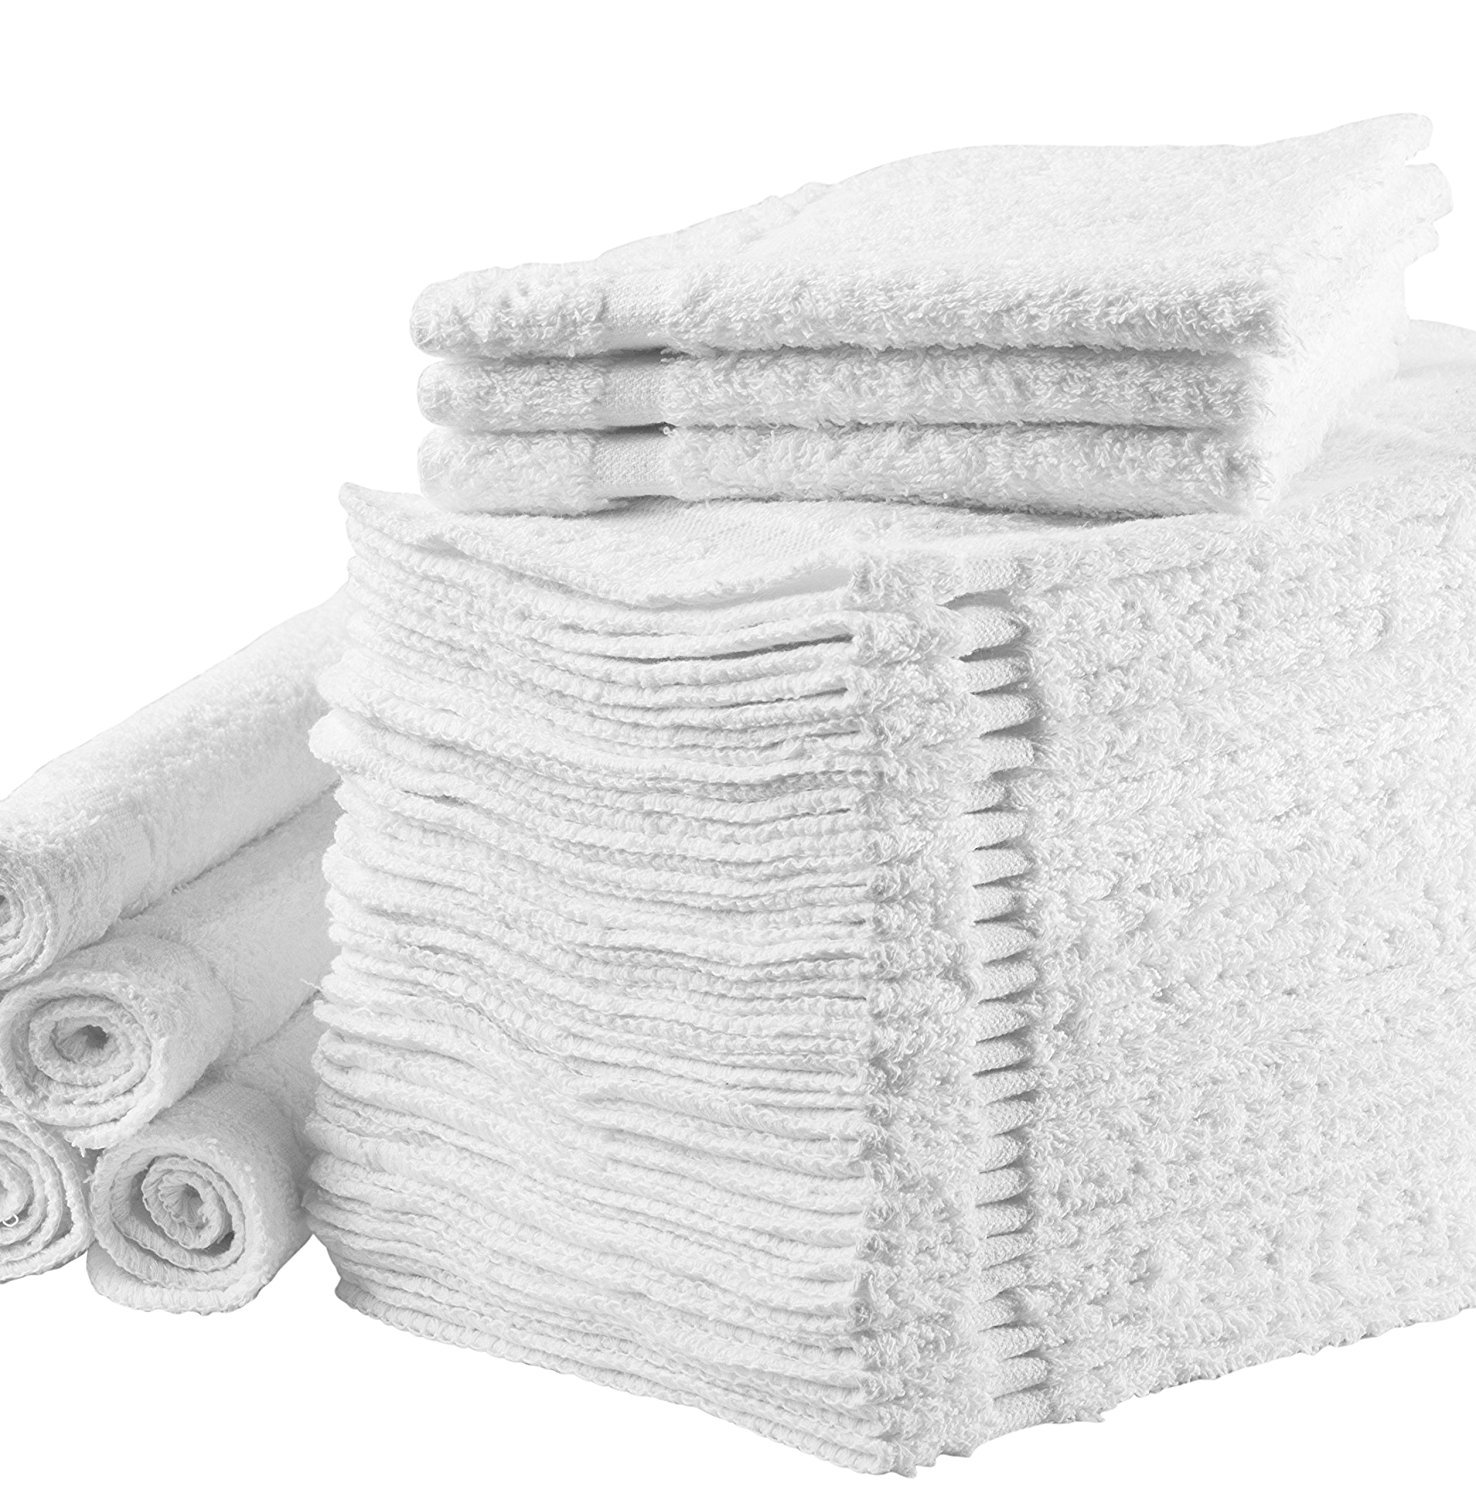 Washcloths for Kitchen or Bath